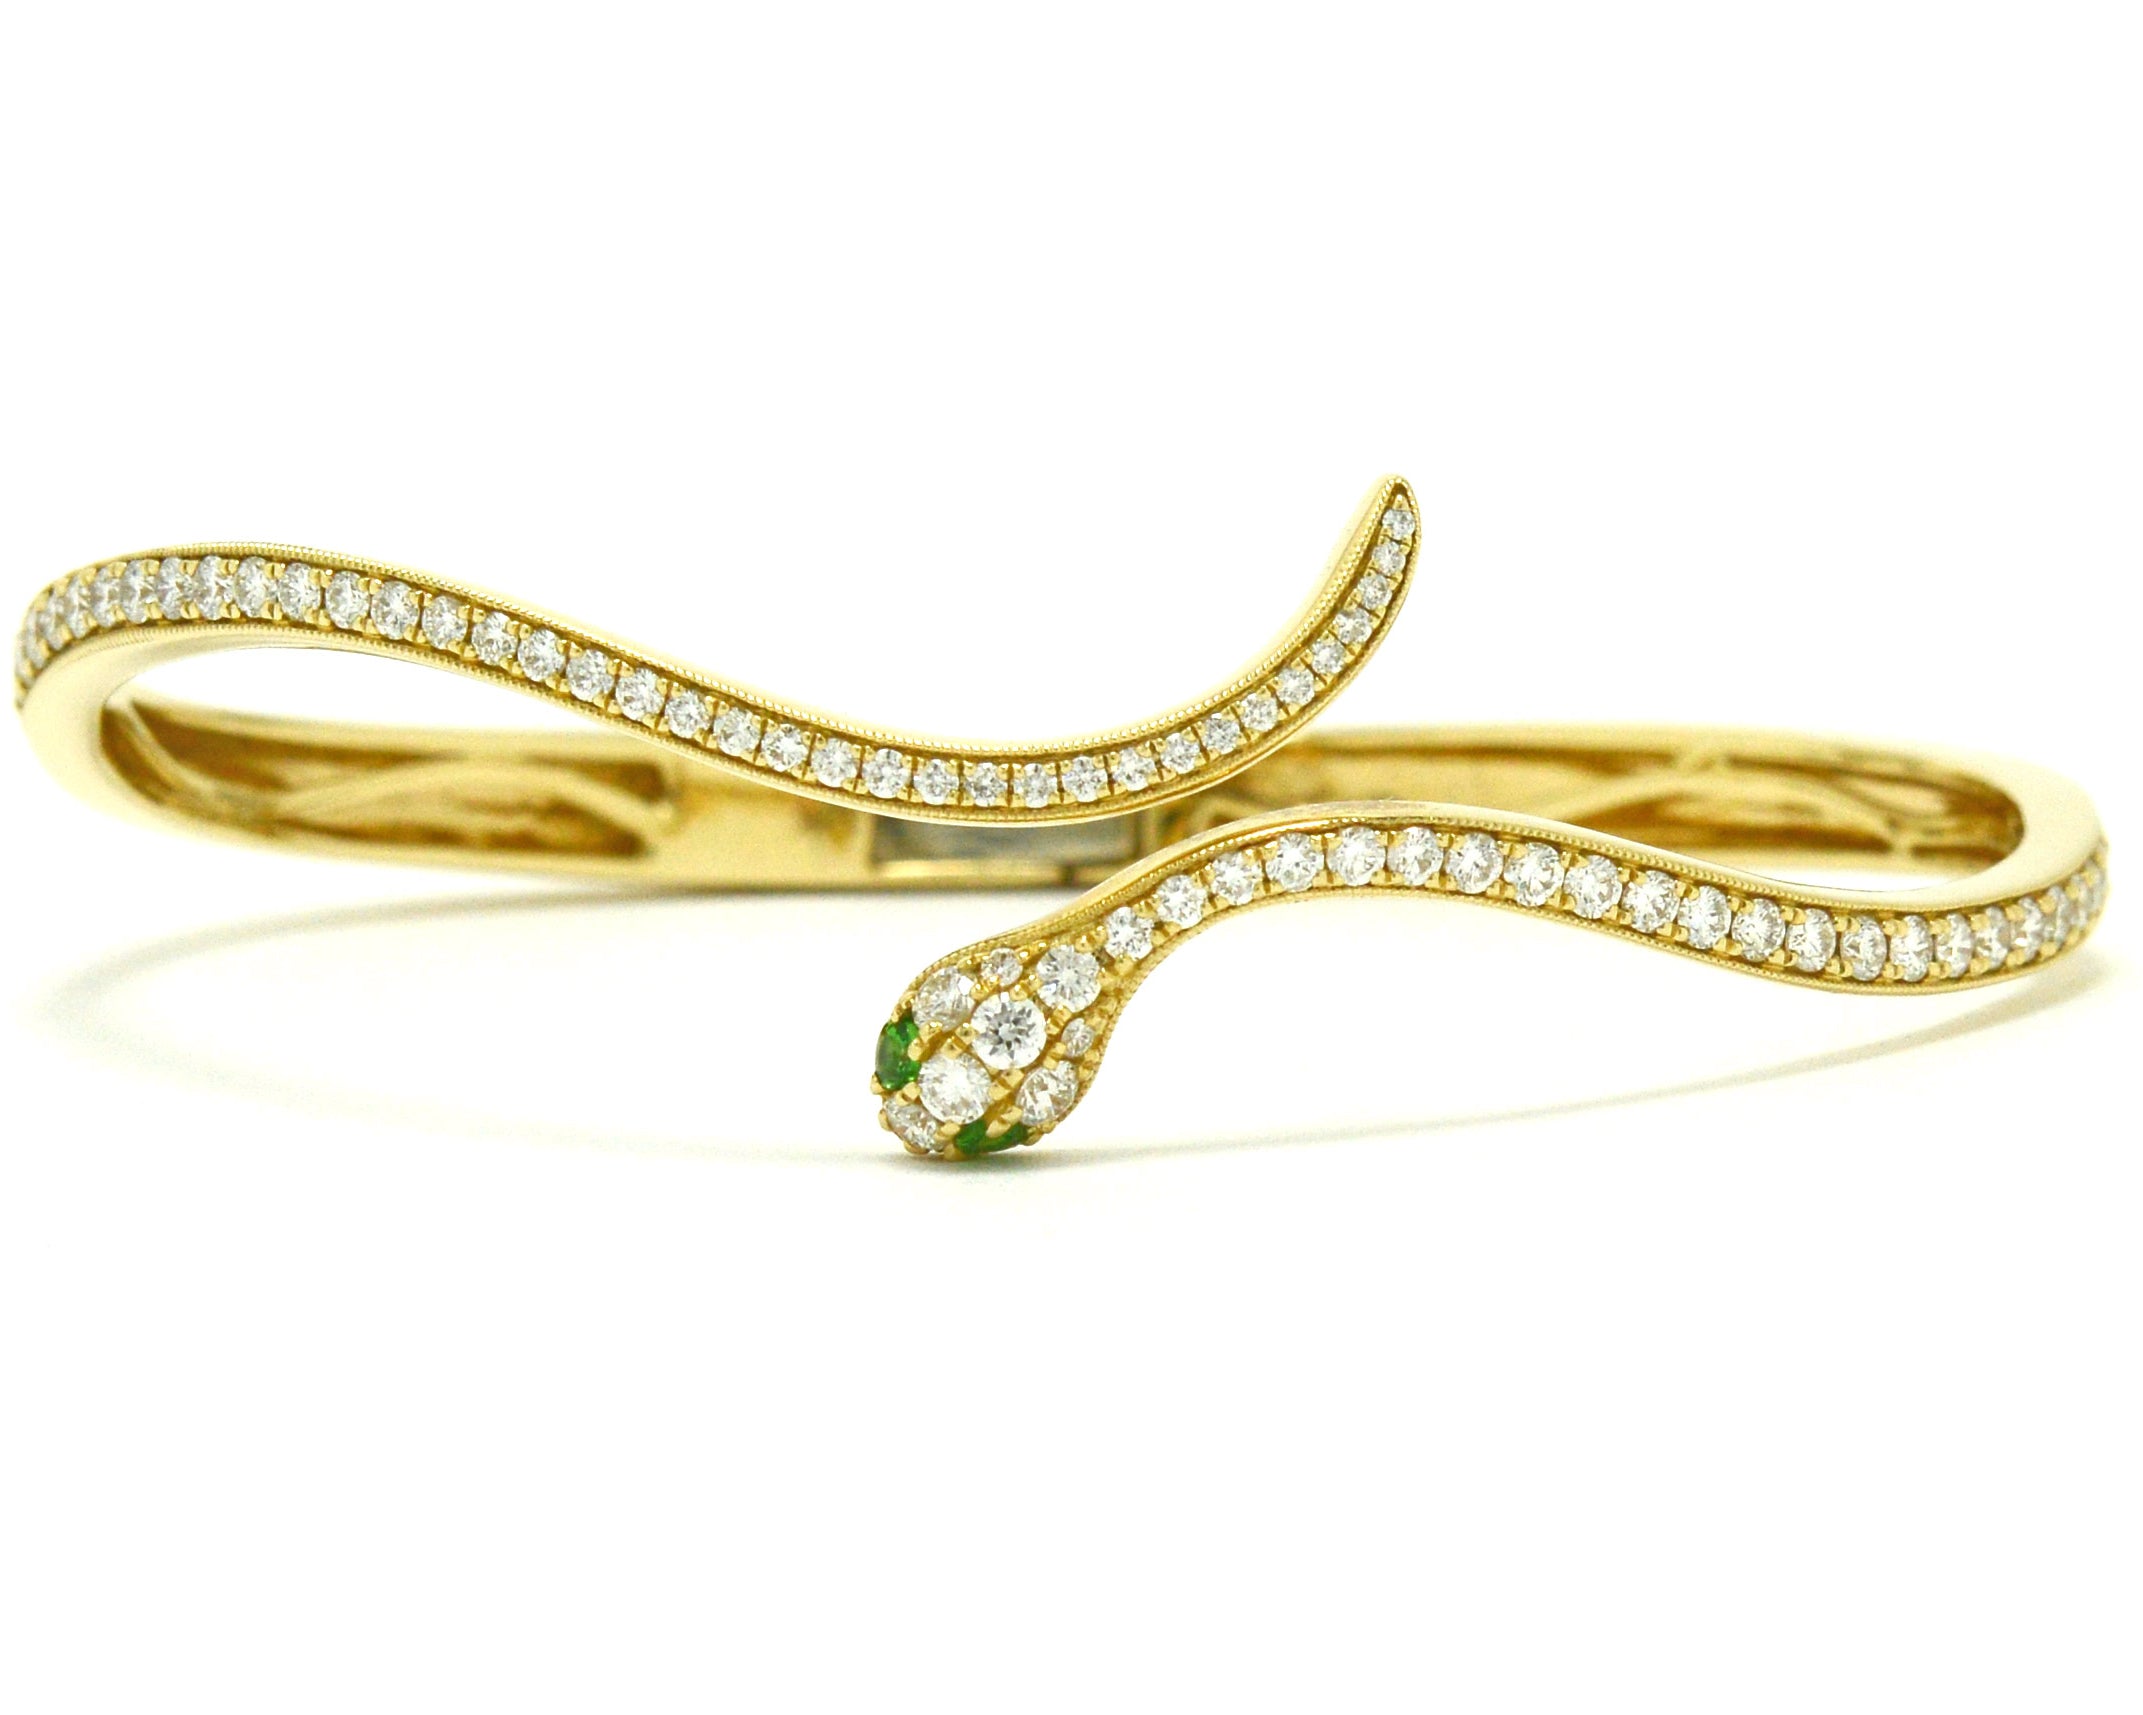 A newly made 14k Egyptian revival snake bangle bracelet with diamonds.